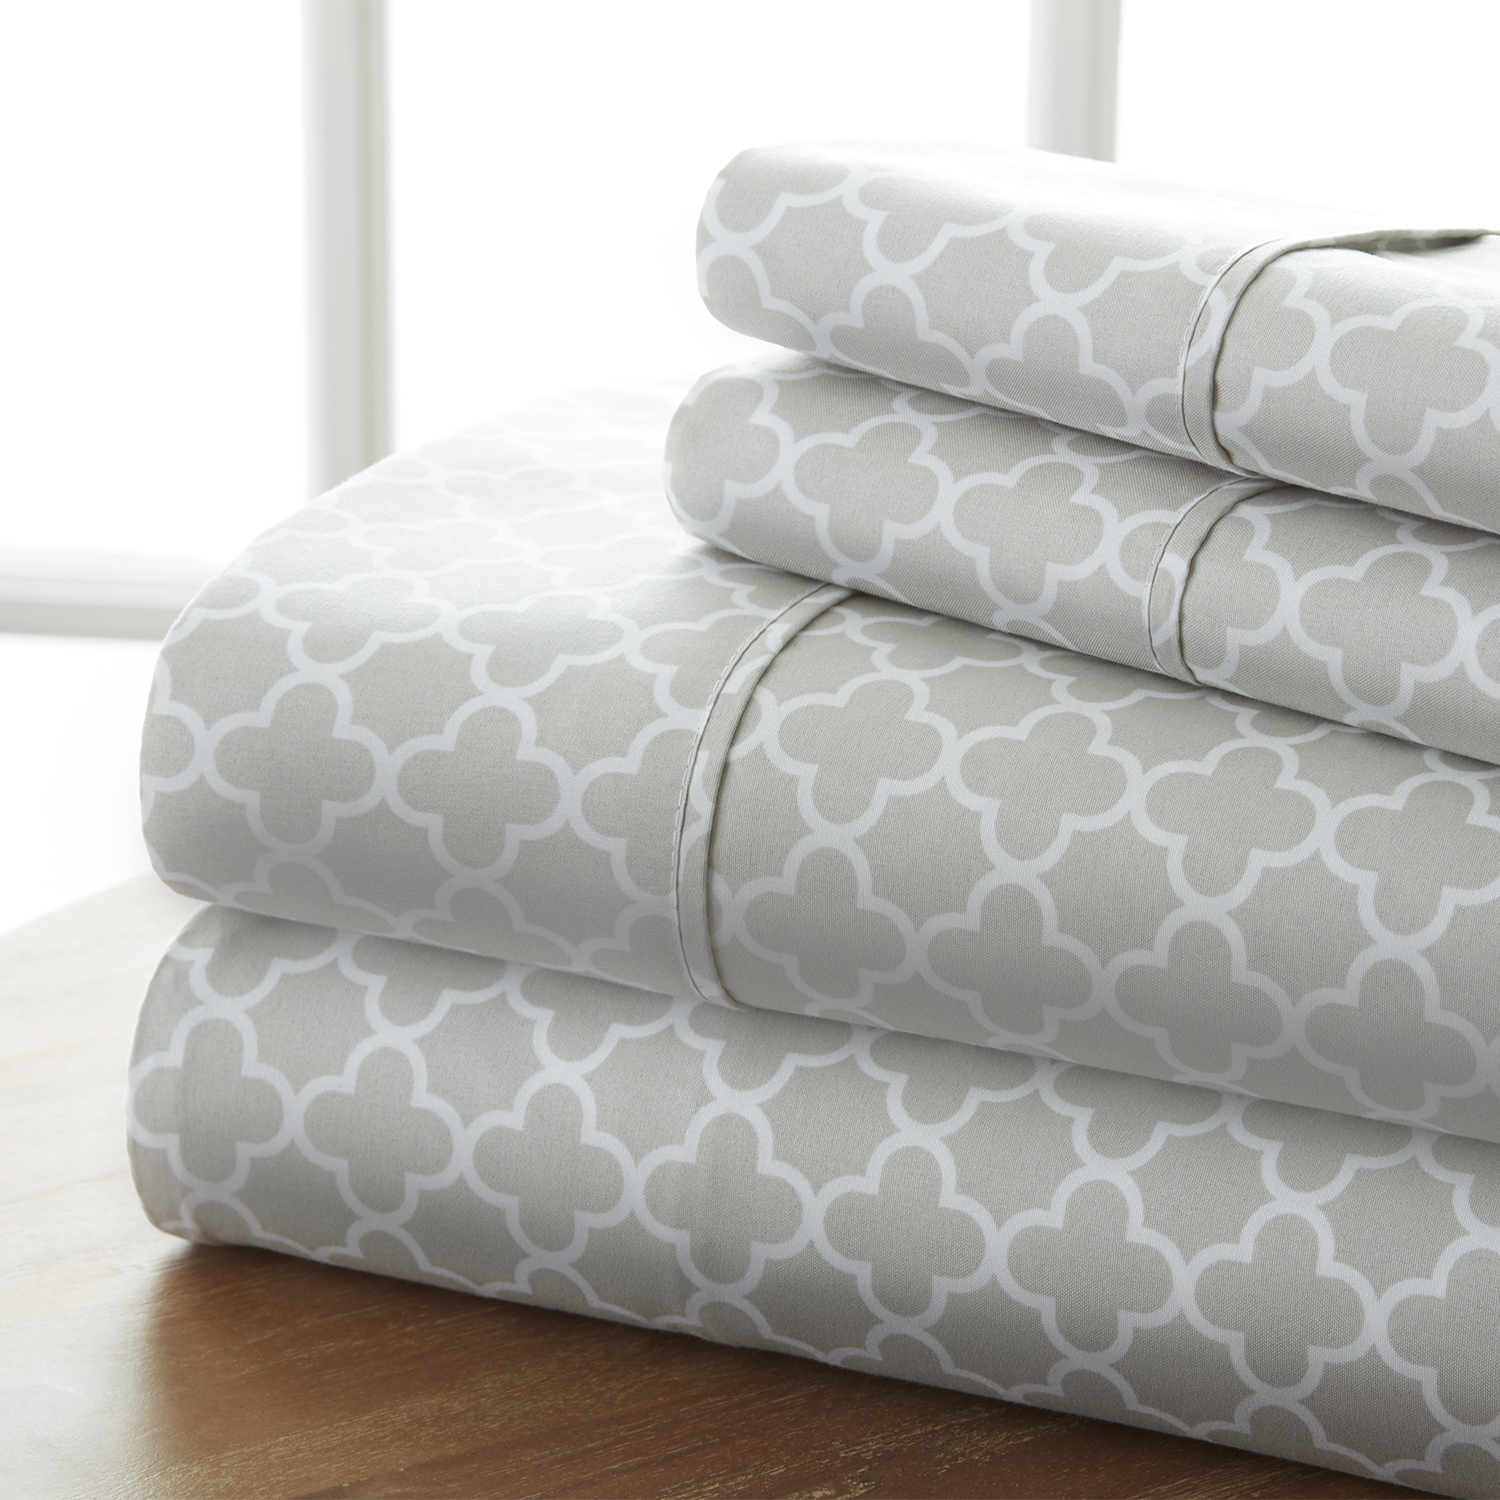 Home Collection Premium Ultra Soft 4 Piece Quatrafoil Bed Sheet Set - California King, Gray